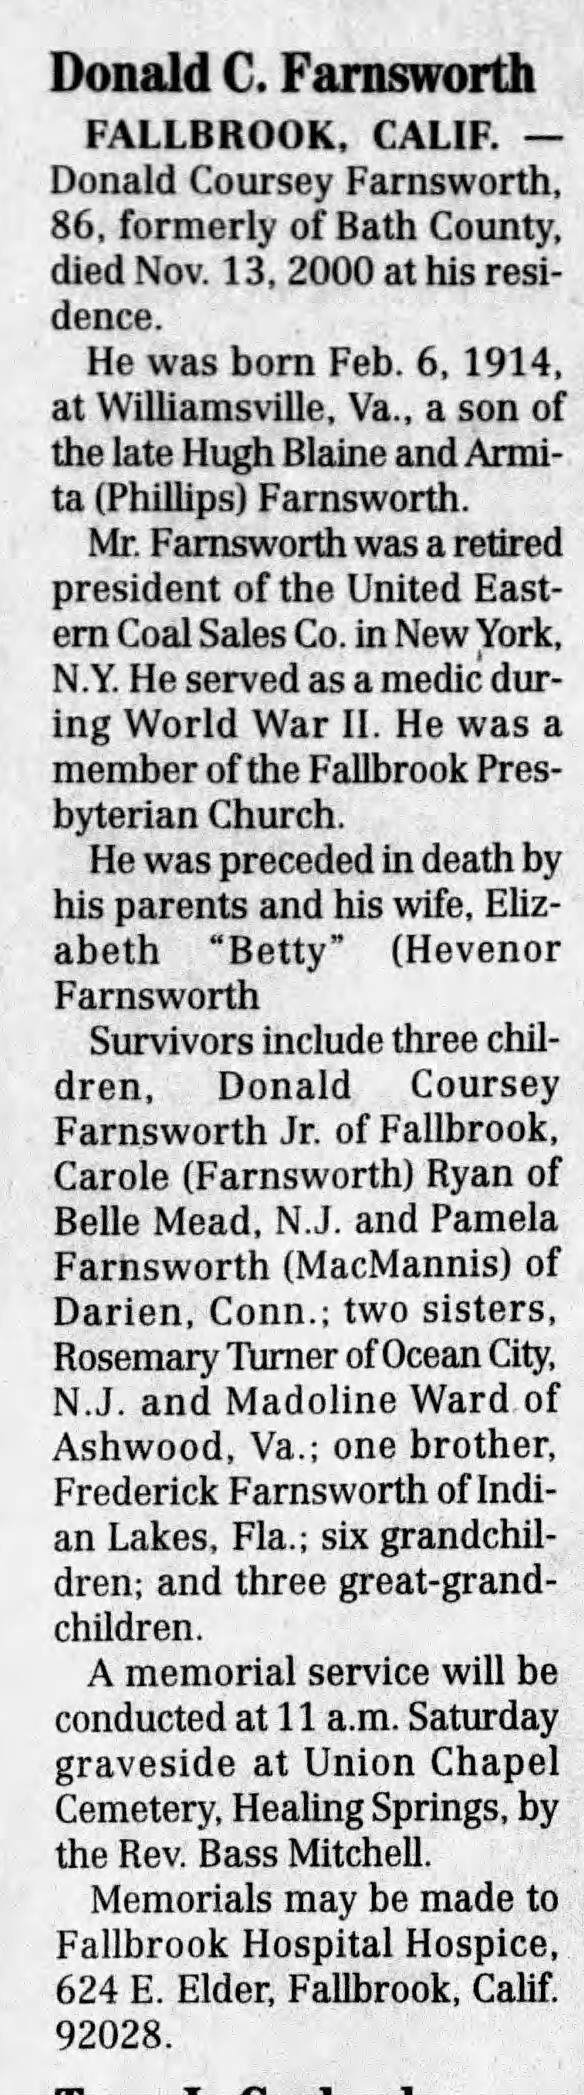 Obituary for Donald G. Farnsworth, 1914-2000 (Aged 86)